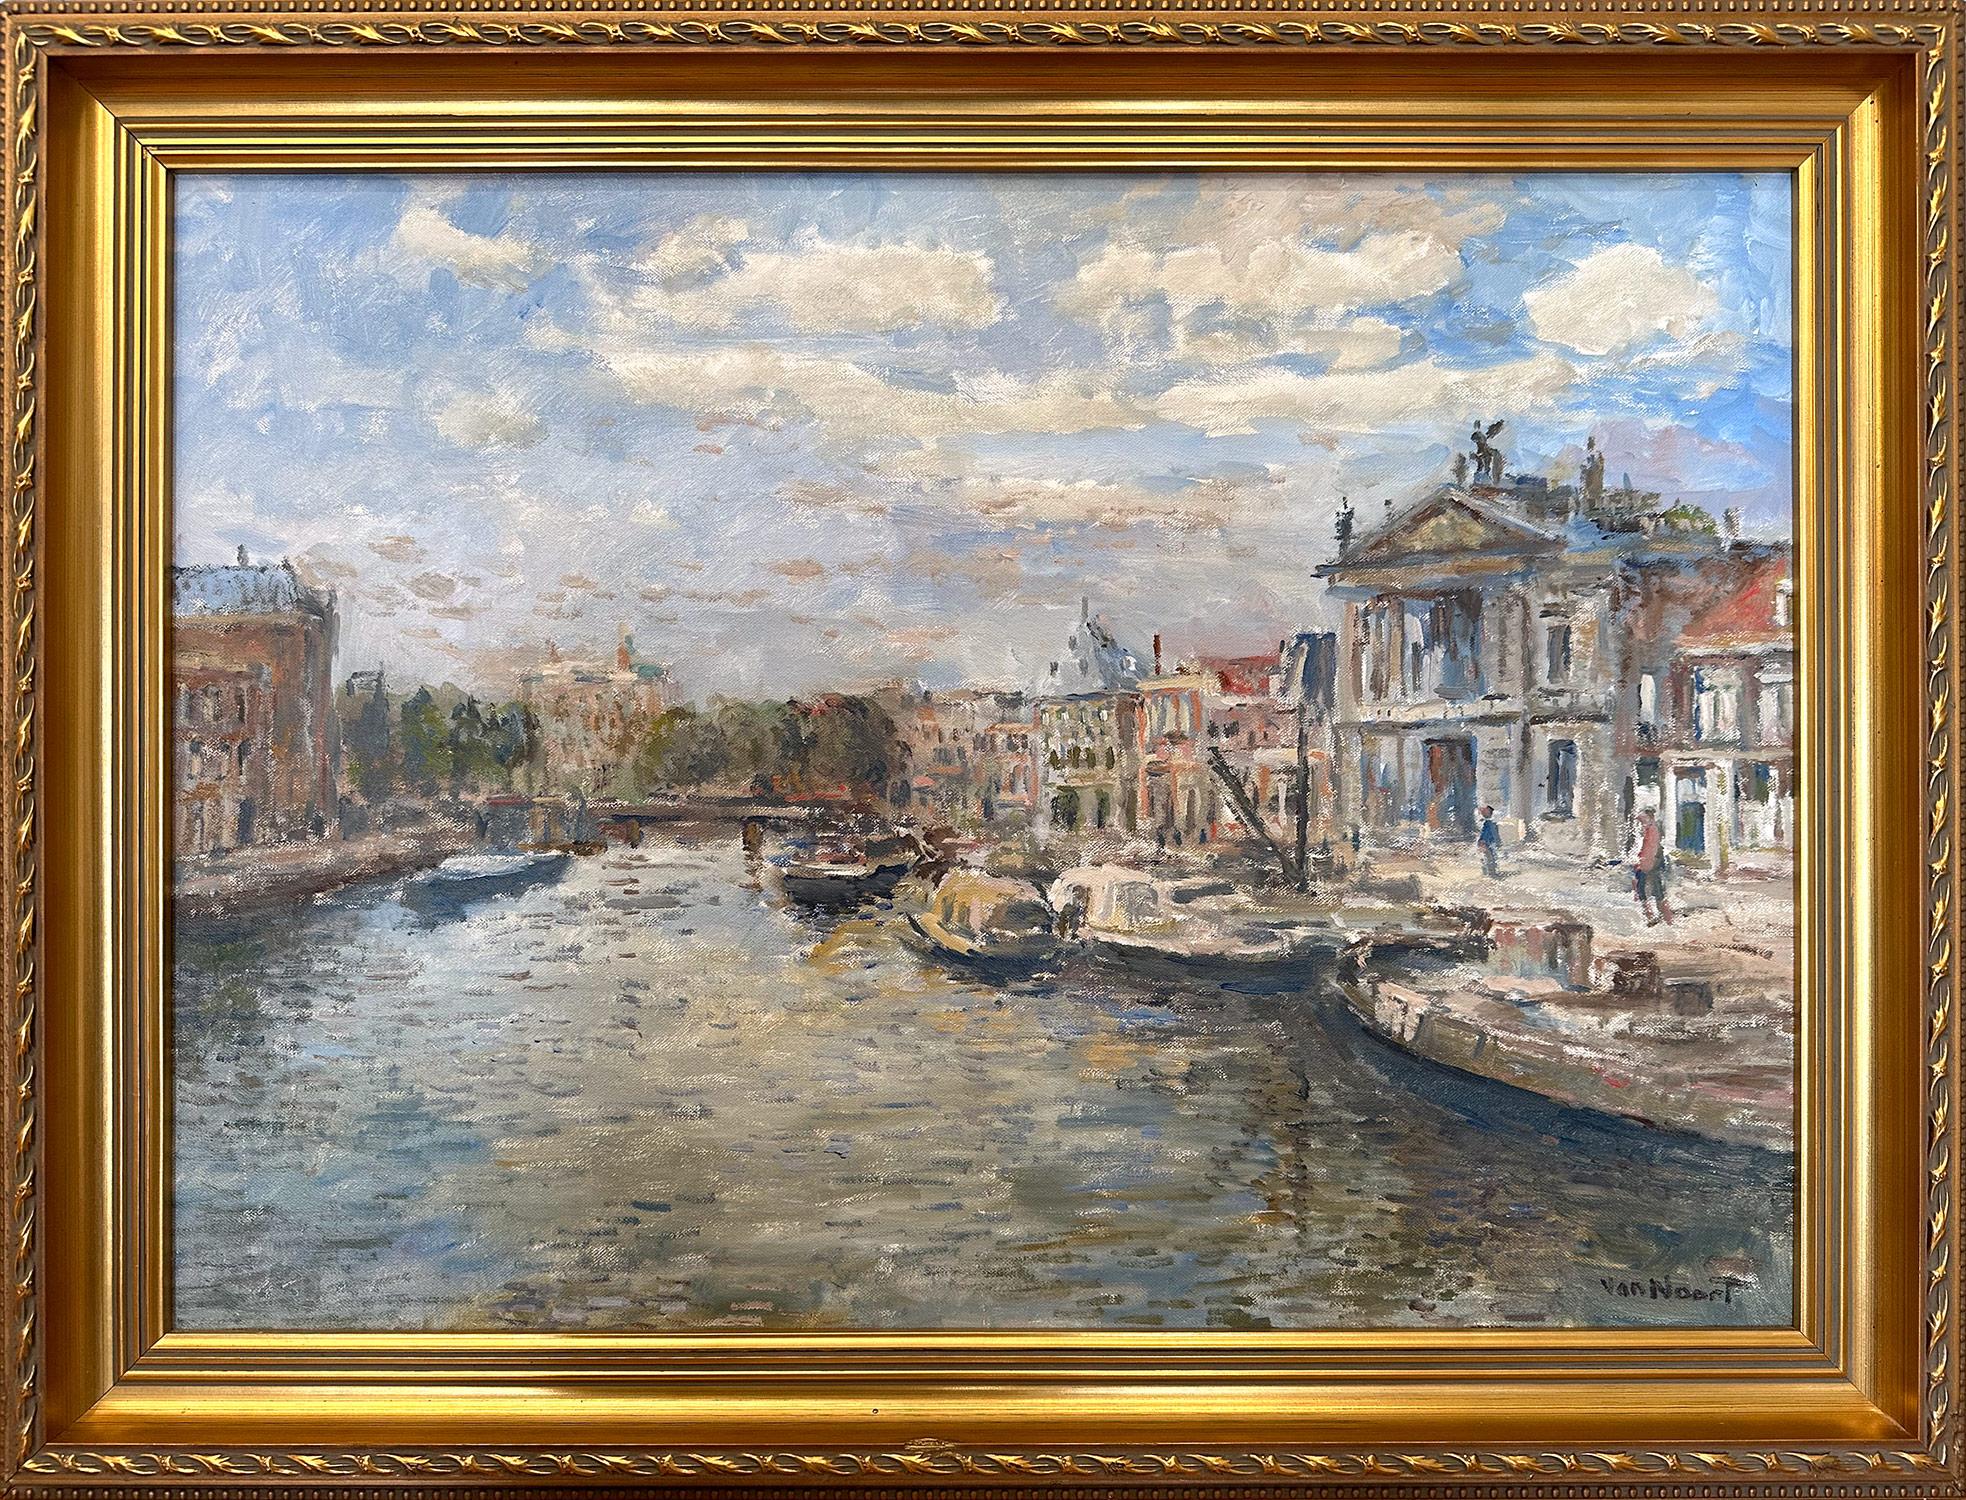 Arie C. Van Noort Figurative Painting - "Spaarne te Haarlem" Impressionistic Oil Painting on Canvas of Netherlands Canal